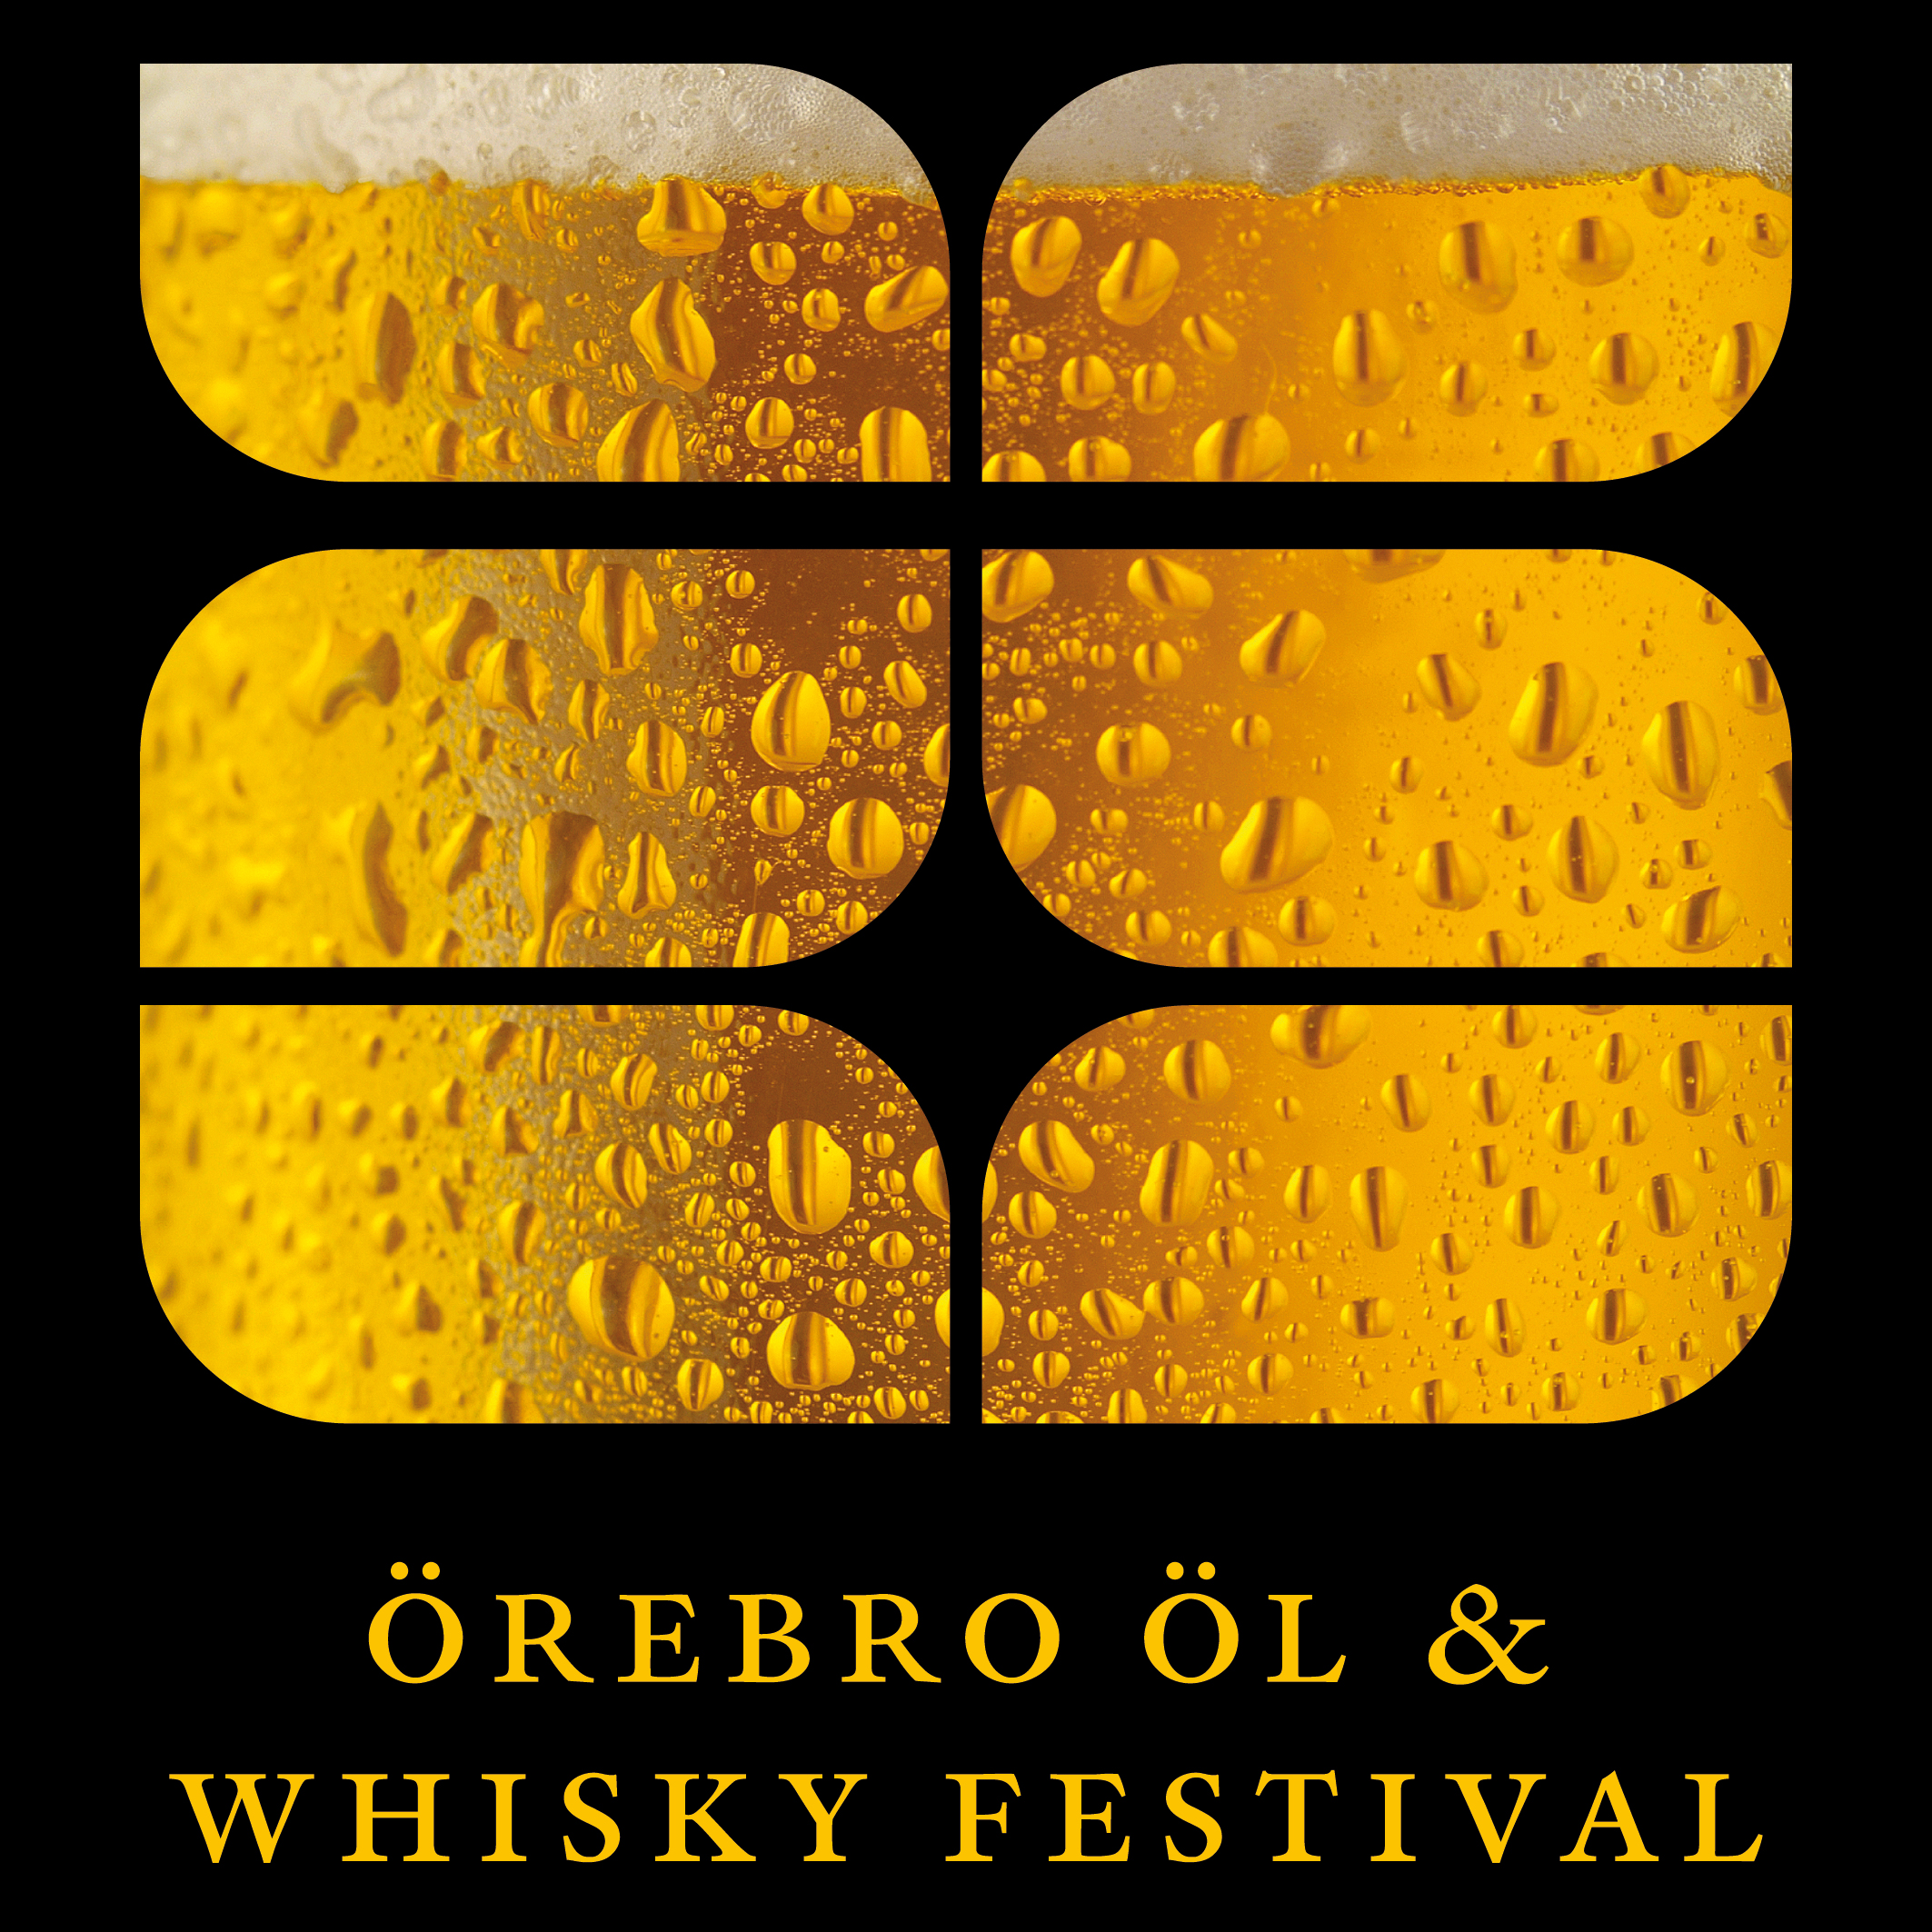 Örebro Öl & Whisky Festival